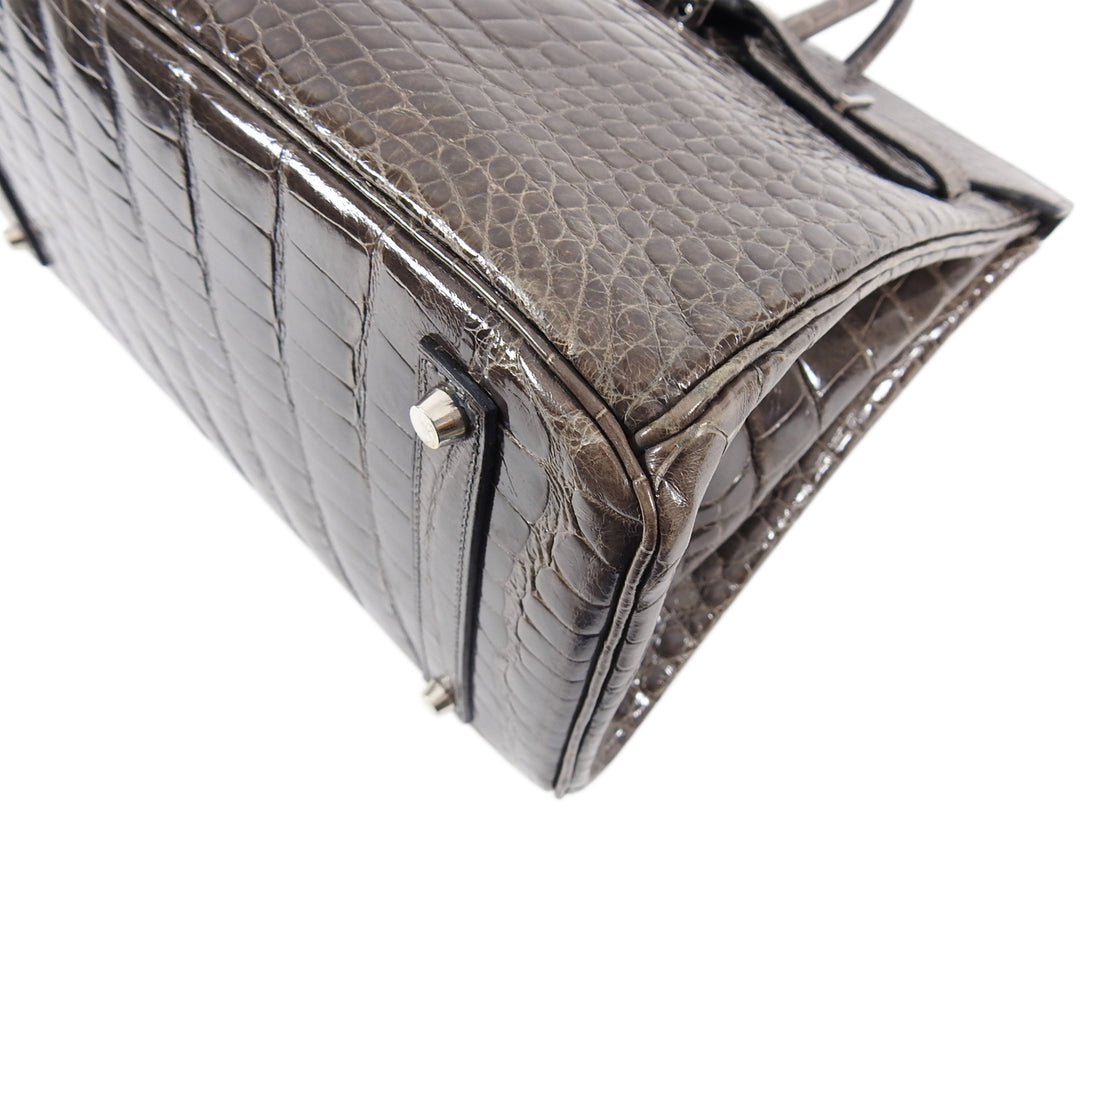 Hermes Birkin Ghillies bag 30 Elephant grey/ Marron fonce/ Ficelle